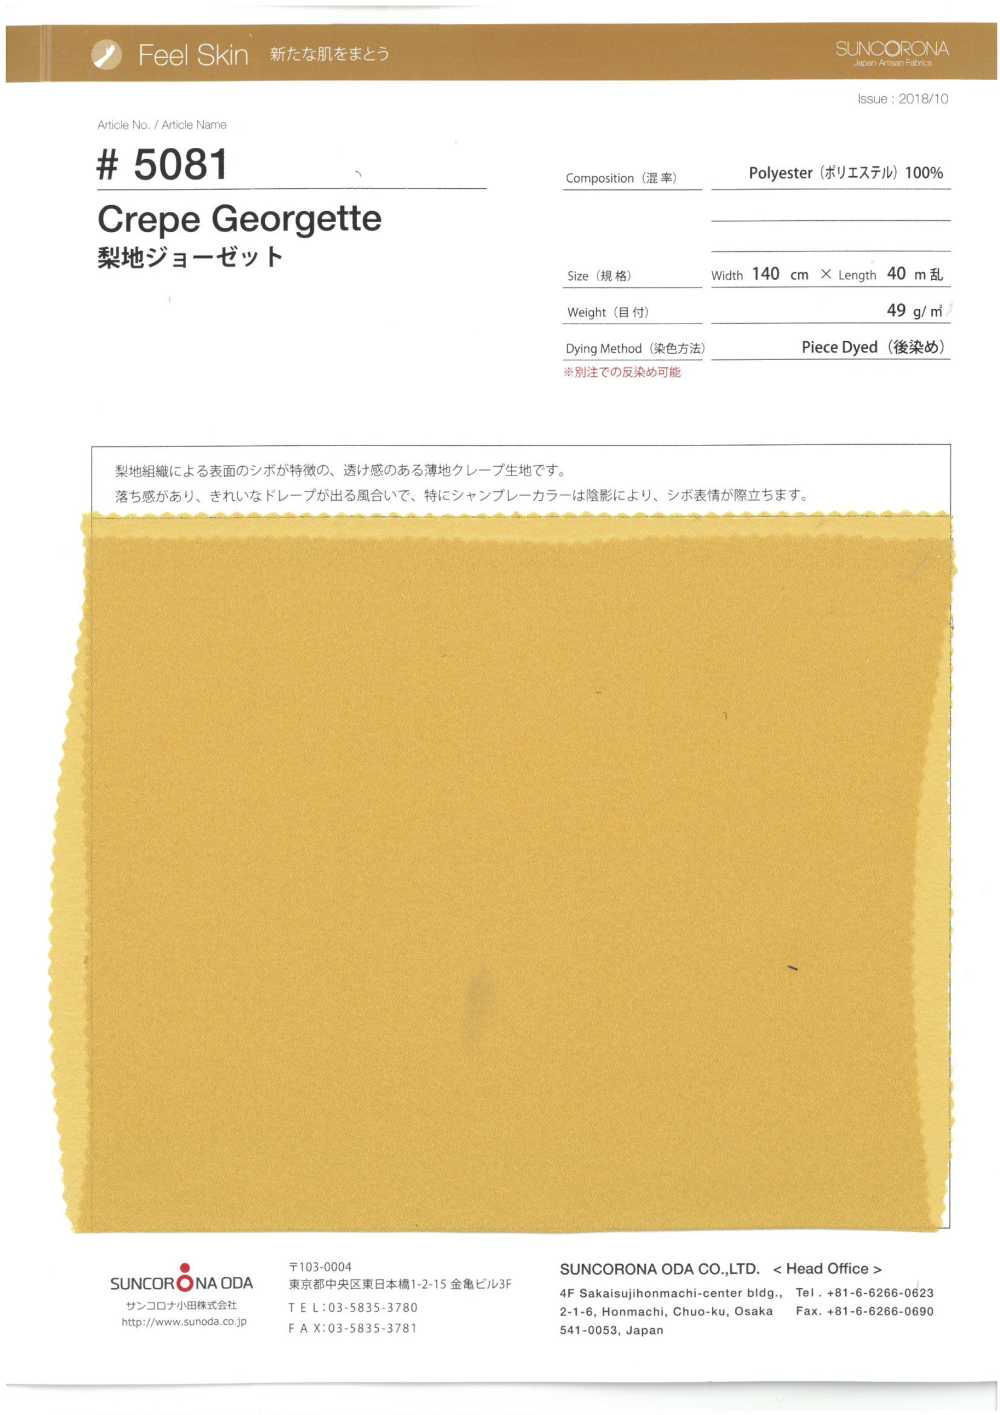 5081 Sandwash-Oberfläche Georgette[Textilgewebe] Suncorona Oda